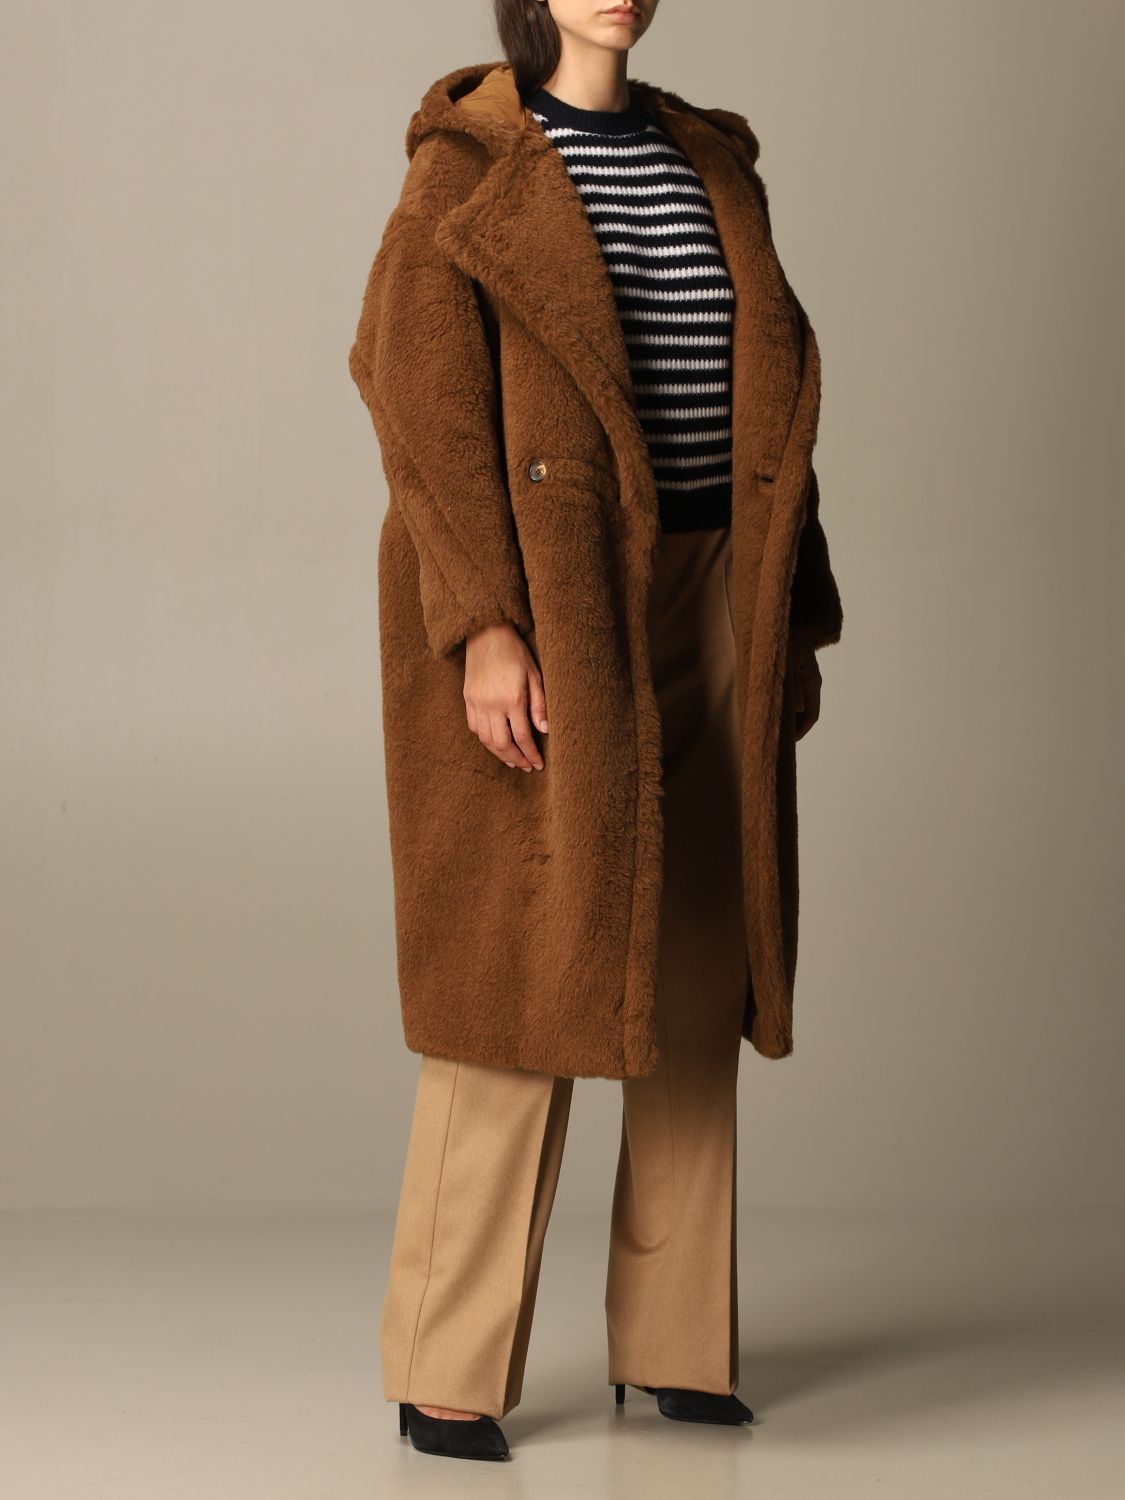 MAX MARA: Teddy 12 double-breasted coat | Coat Max Mara Women Leather ...